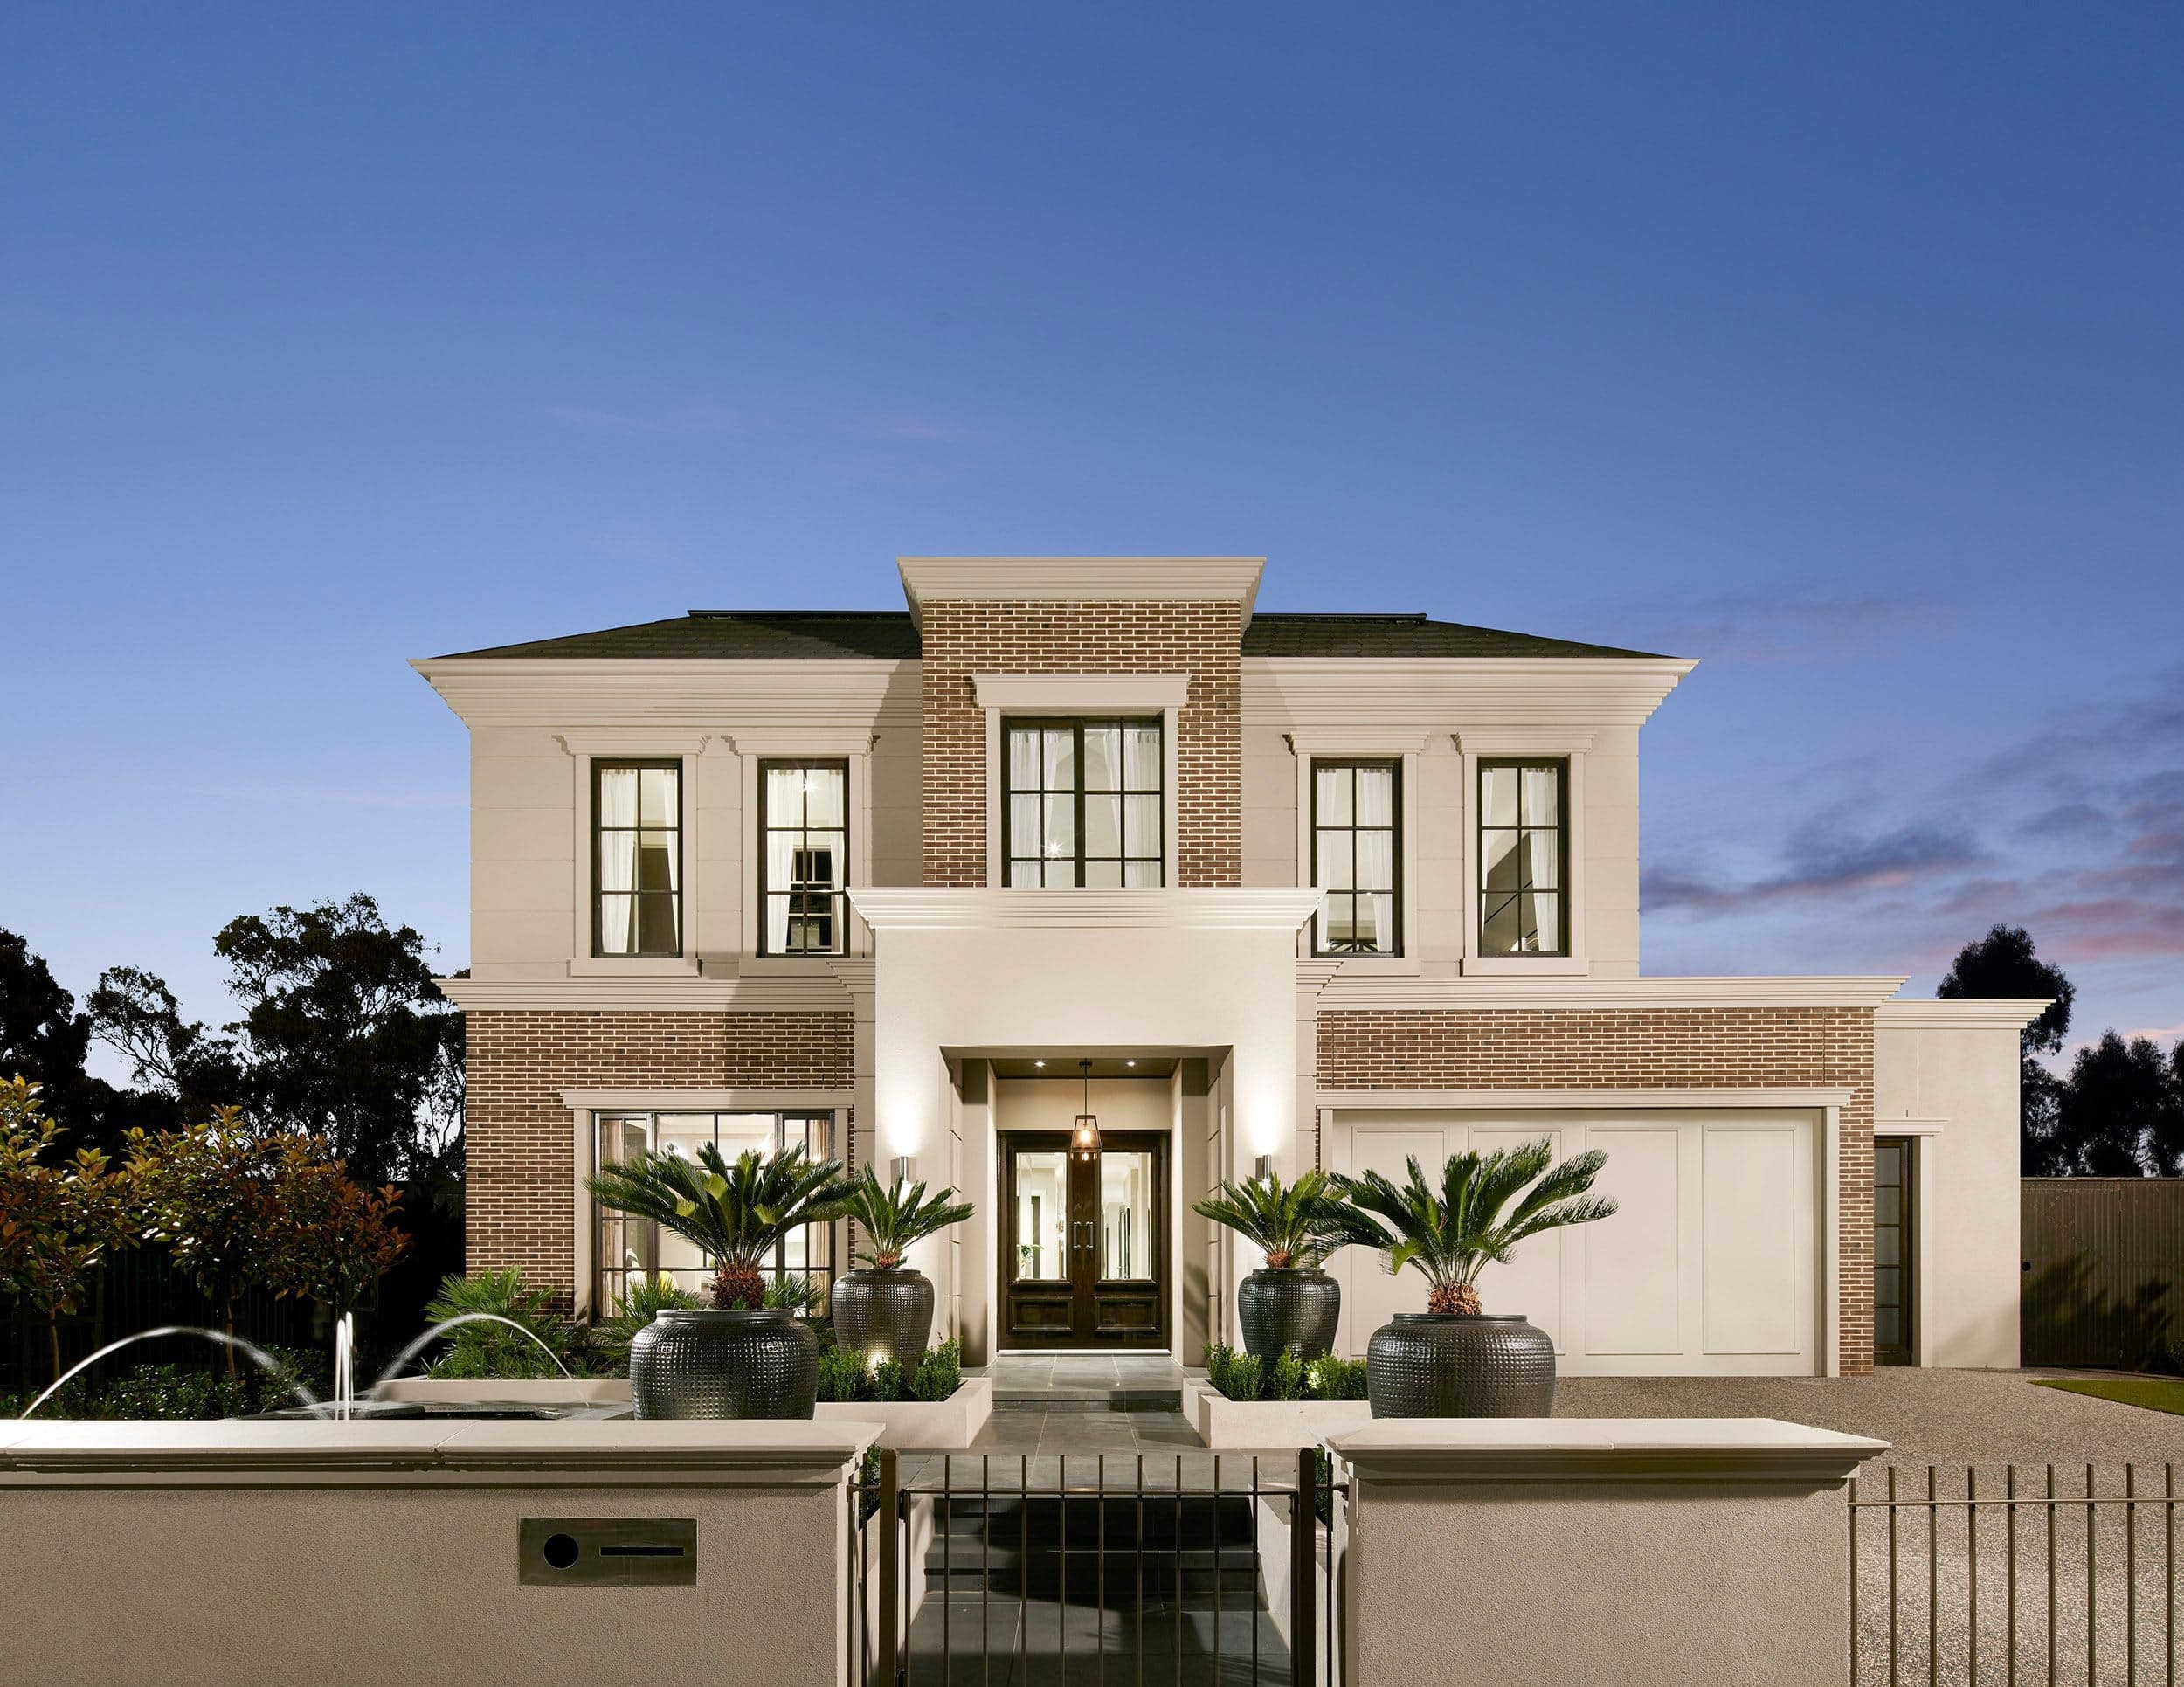 metricon somerset modern home facade design beige and brown brick home exterior colours